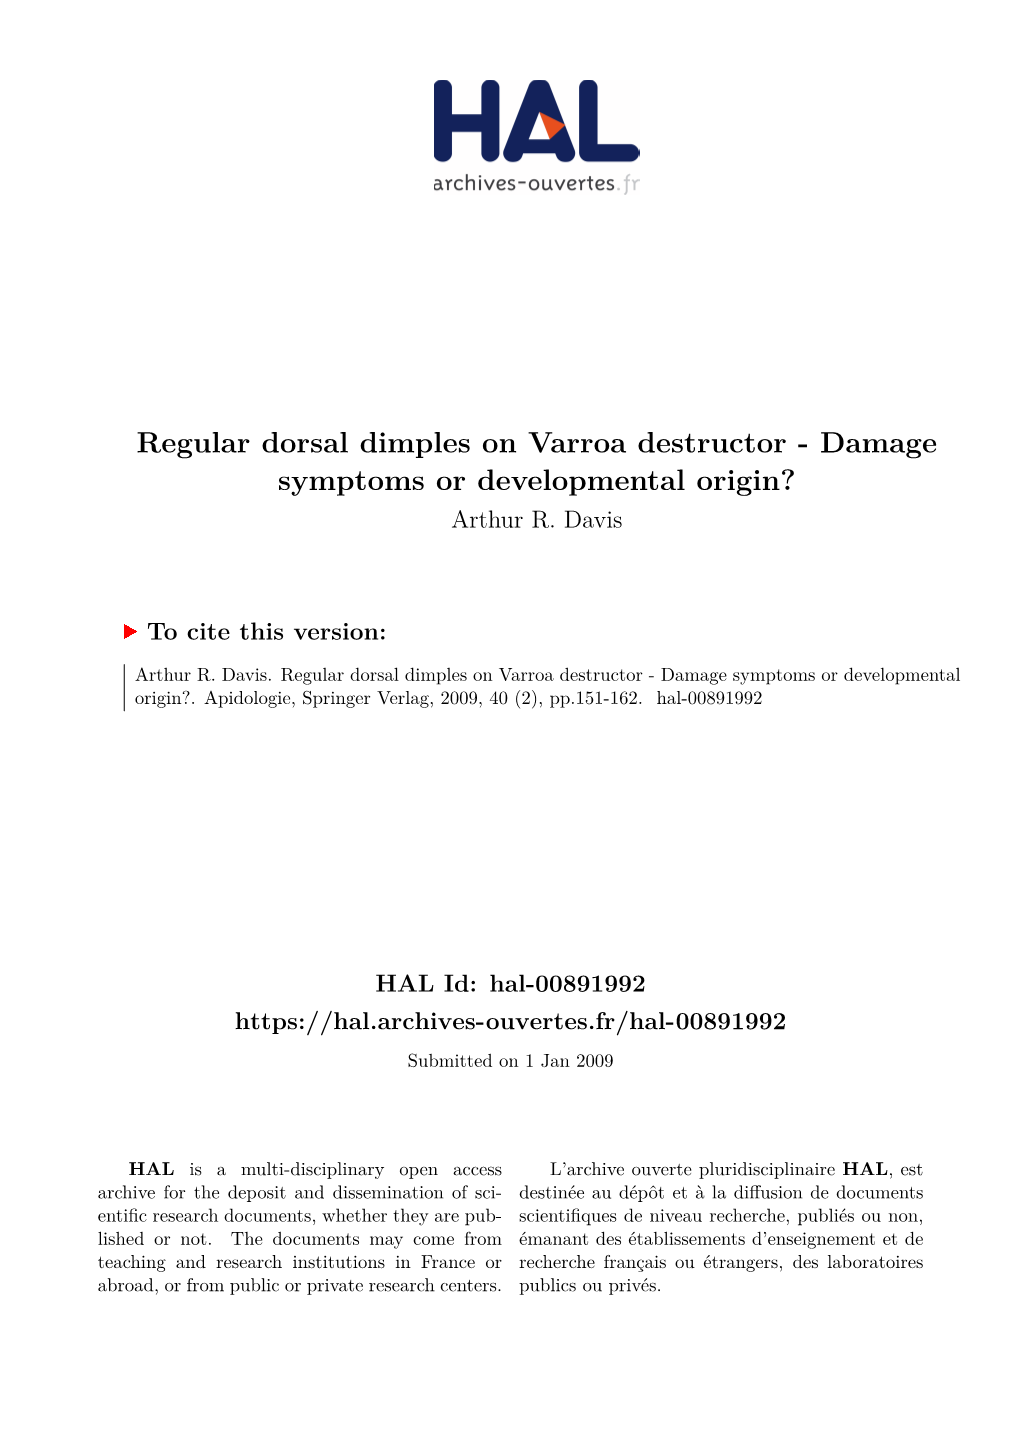 Regular Dorsal Dimples on Varroa Destructor - Damage Symptoms Or Developmental Origin? Arthur R